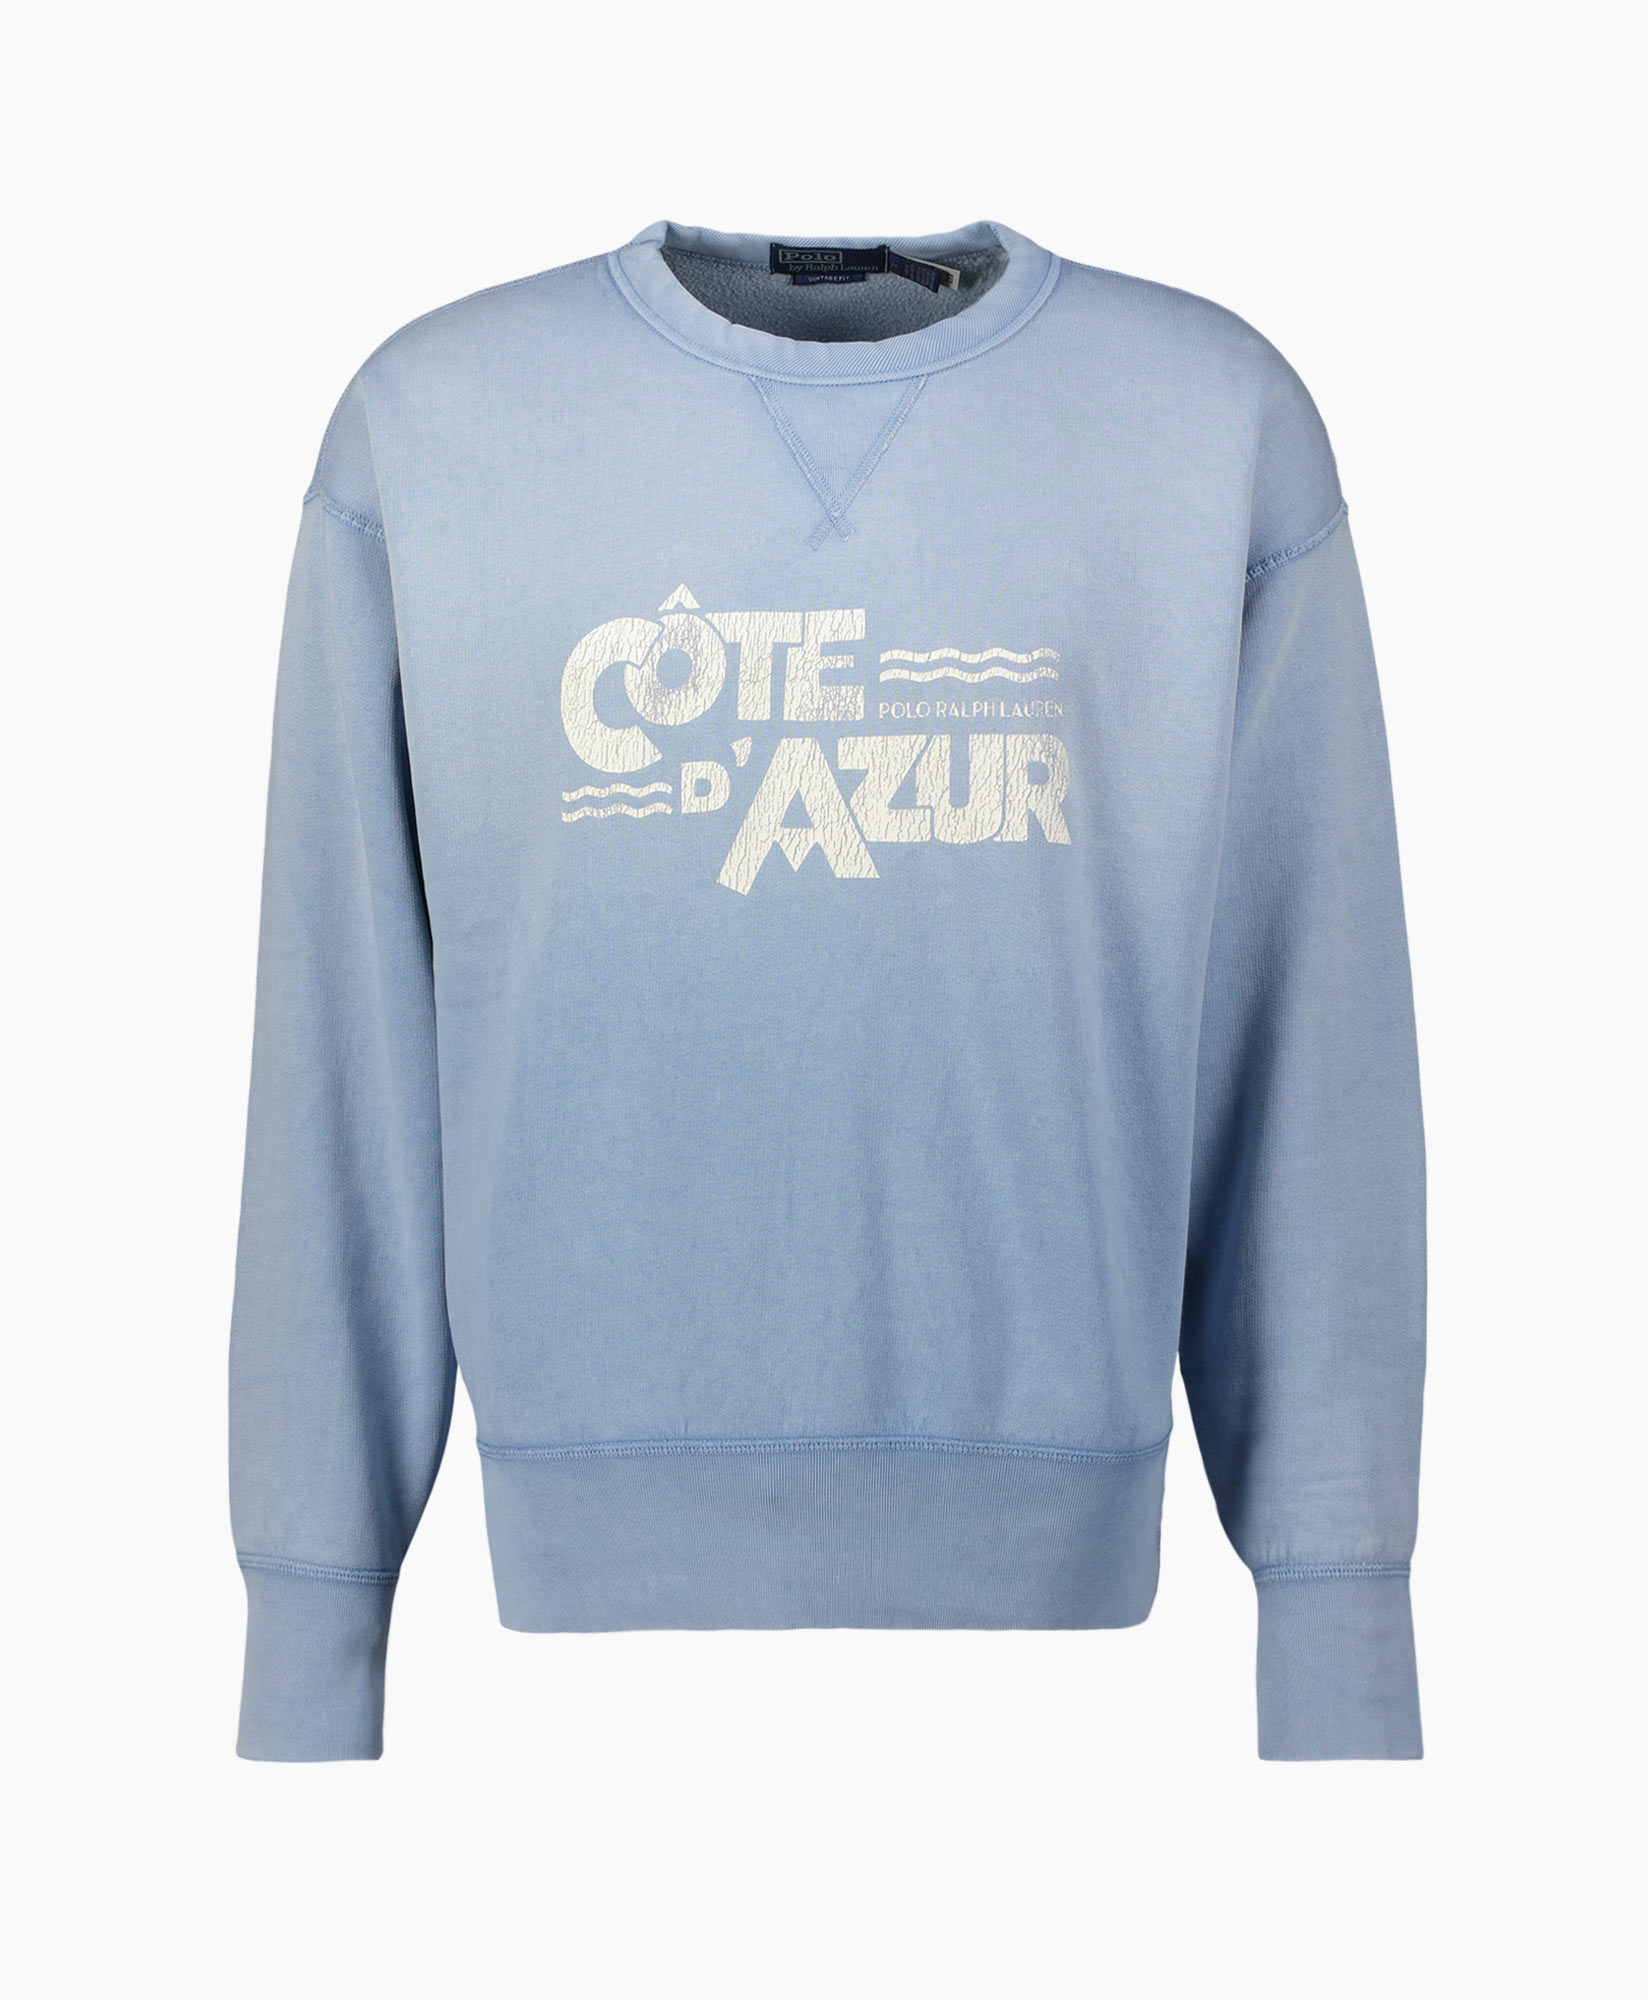 Sweater Longe Sleeve Cote D'azur Licht Blauw